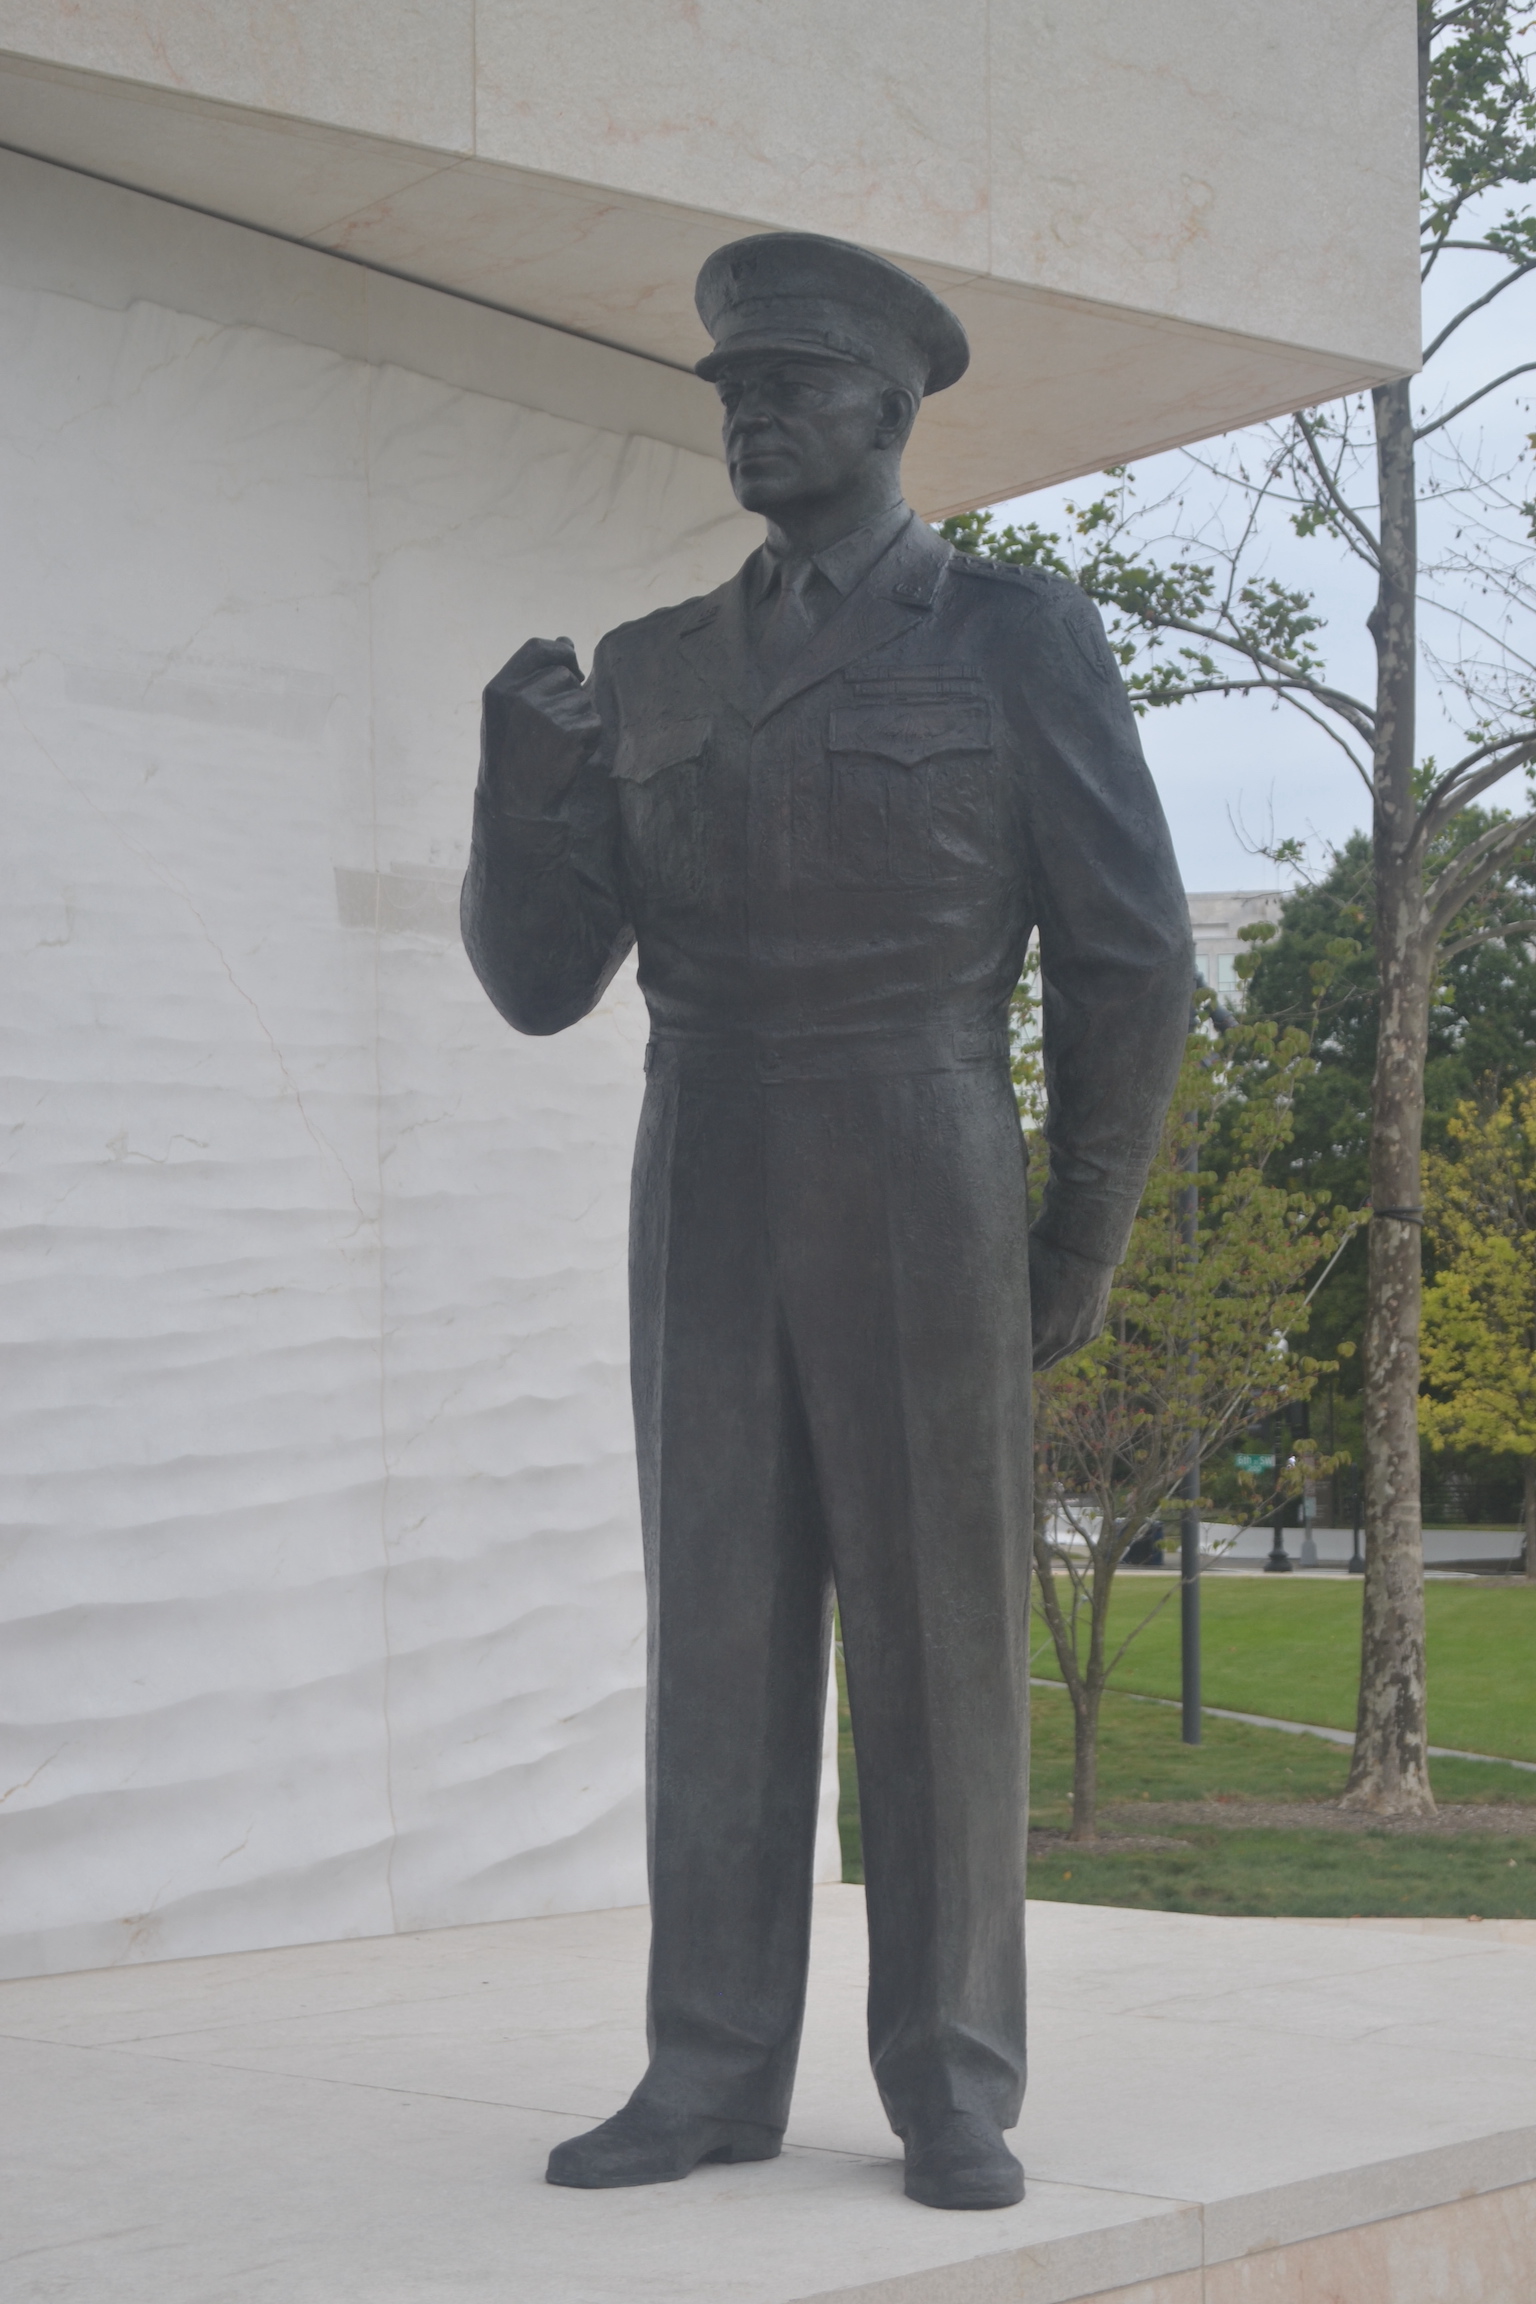 A bronze statue of a man in a military uniform.